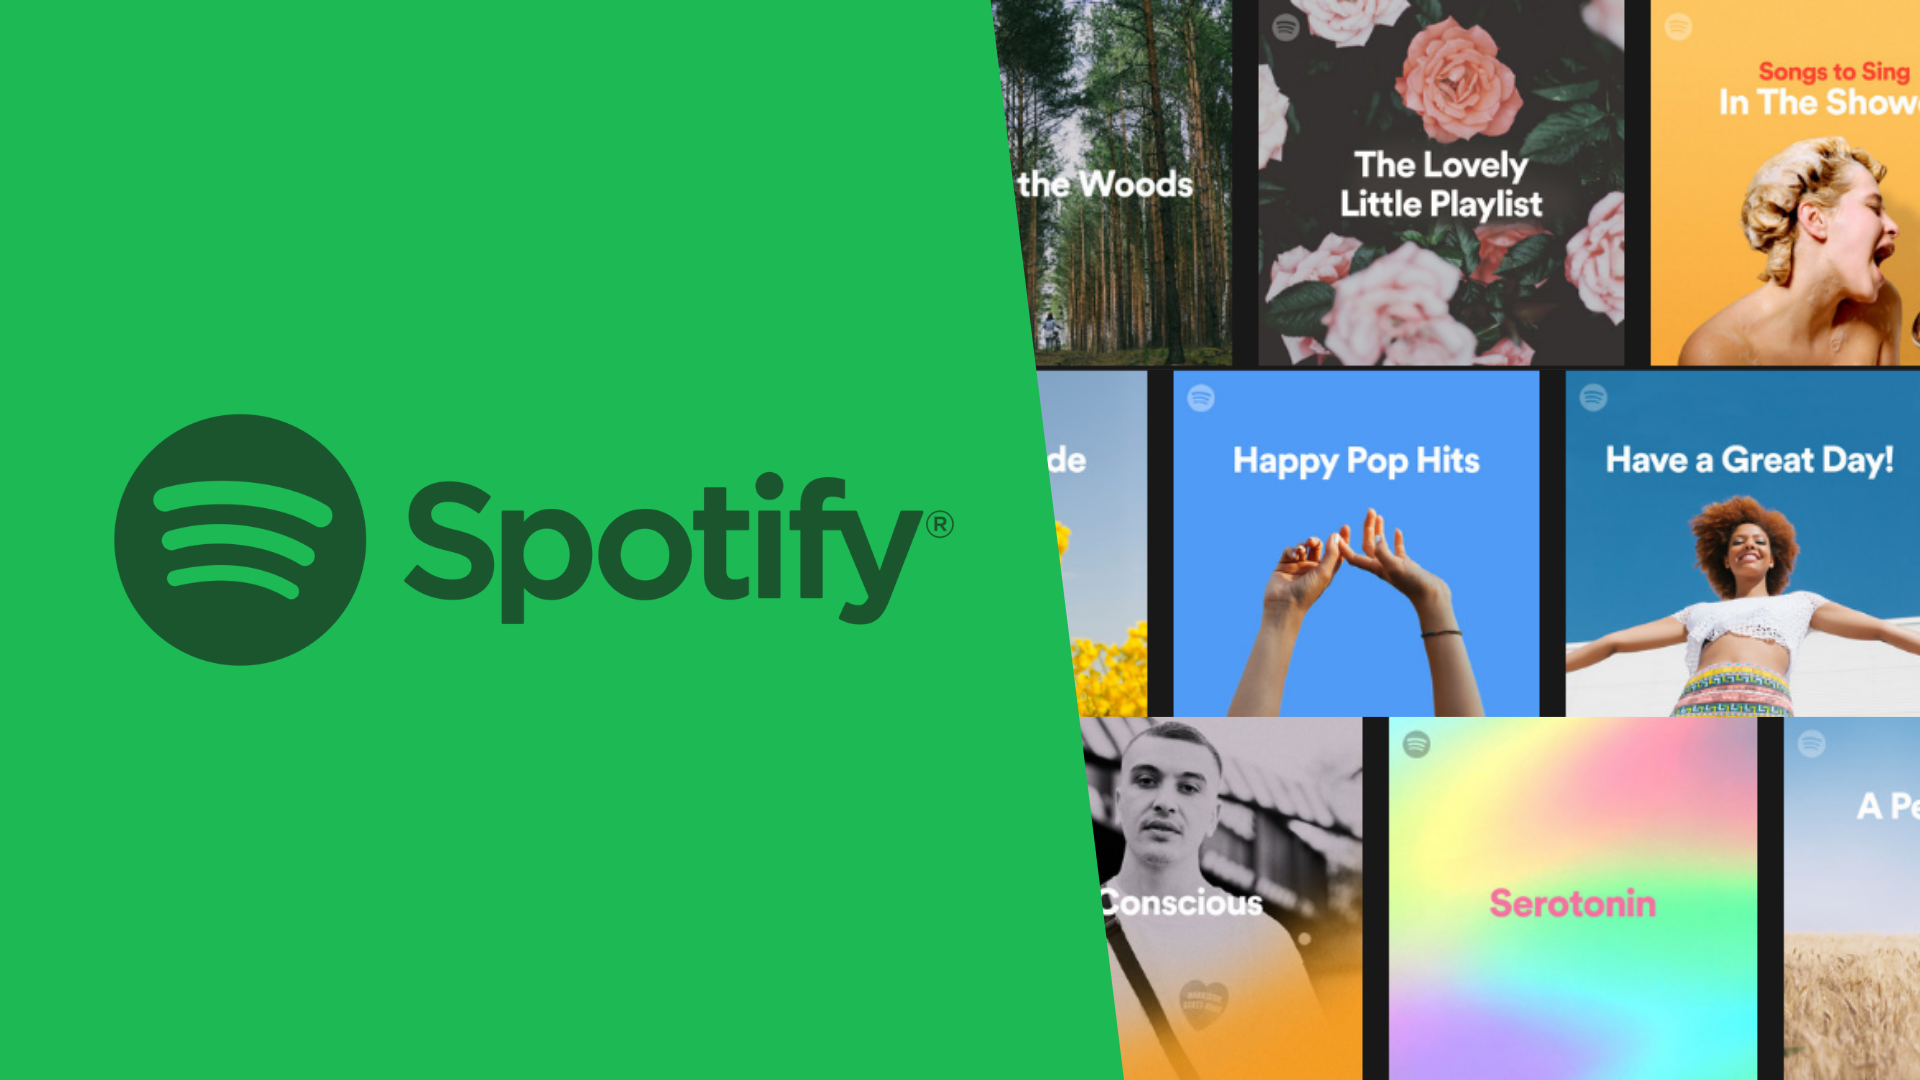 buy Spotify followers